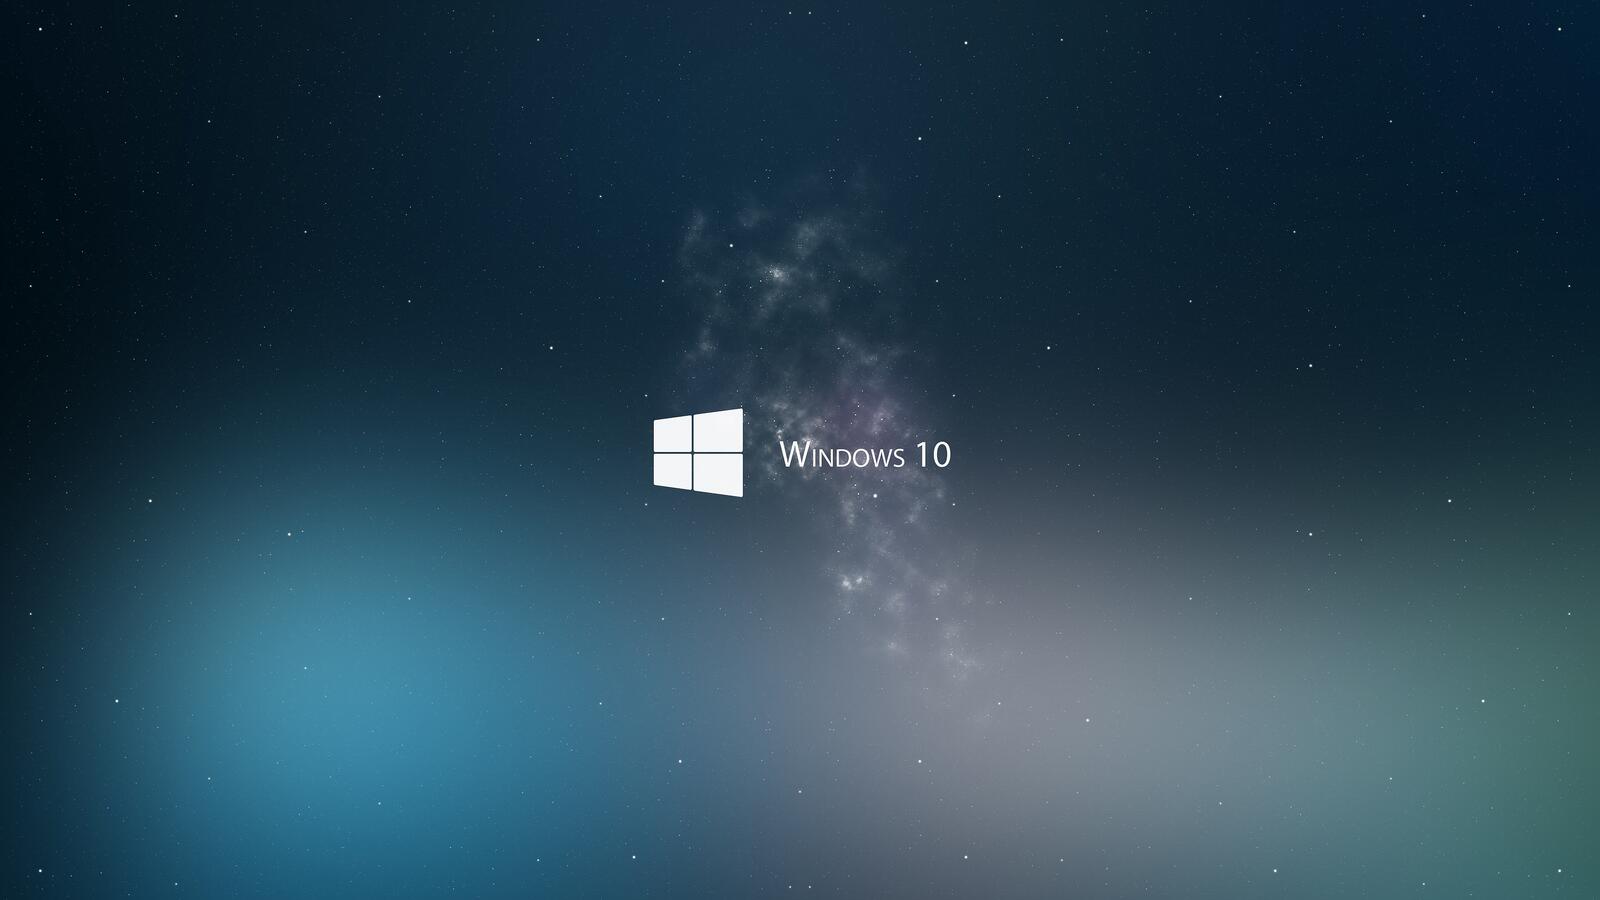 Wallpapers Windows 10 screensaver transparency on the desktop